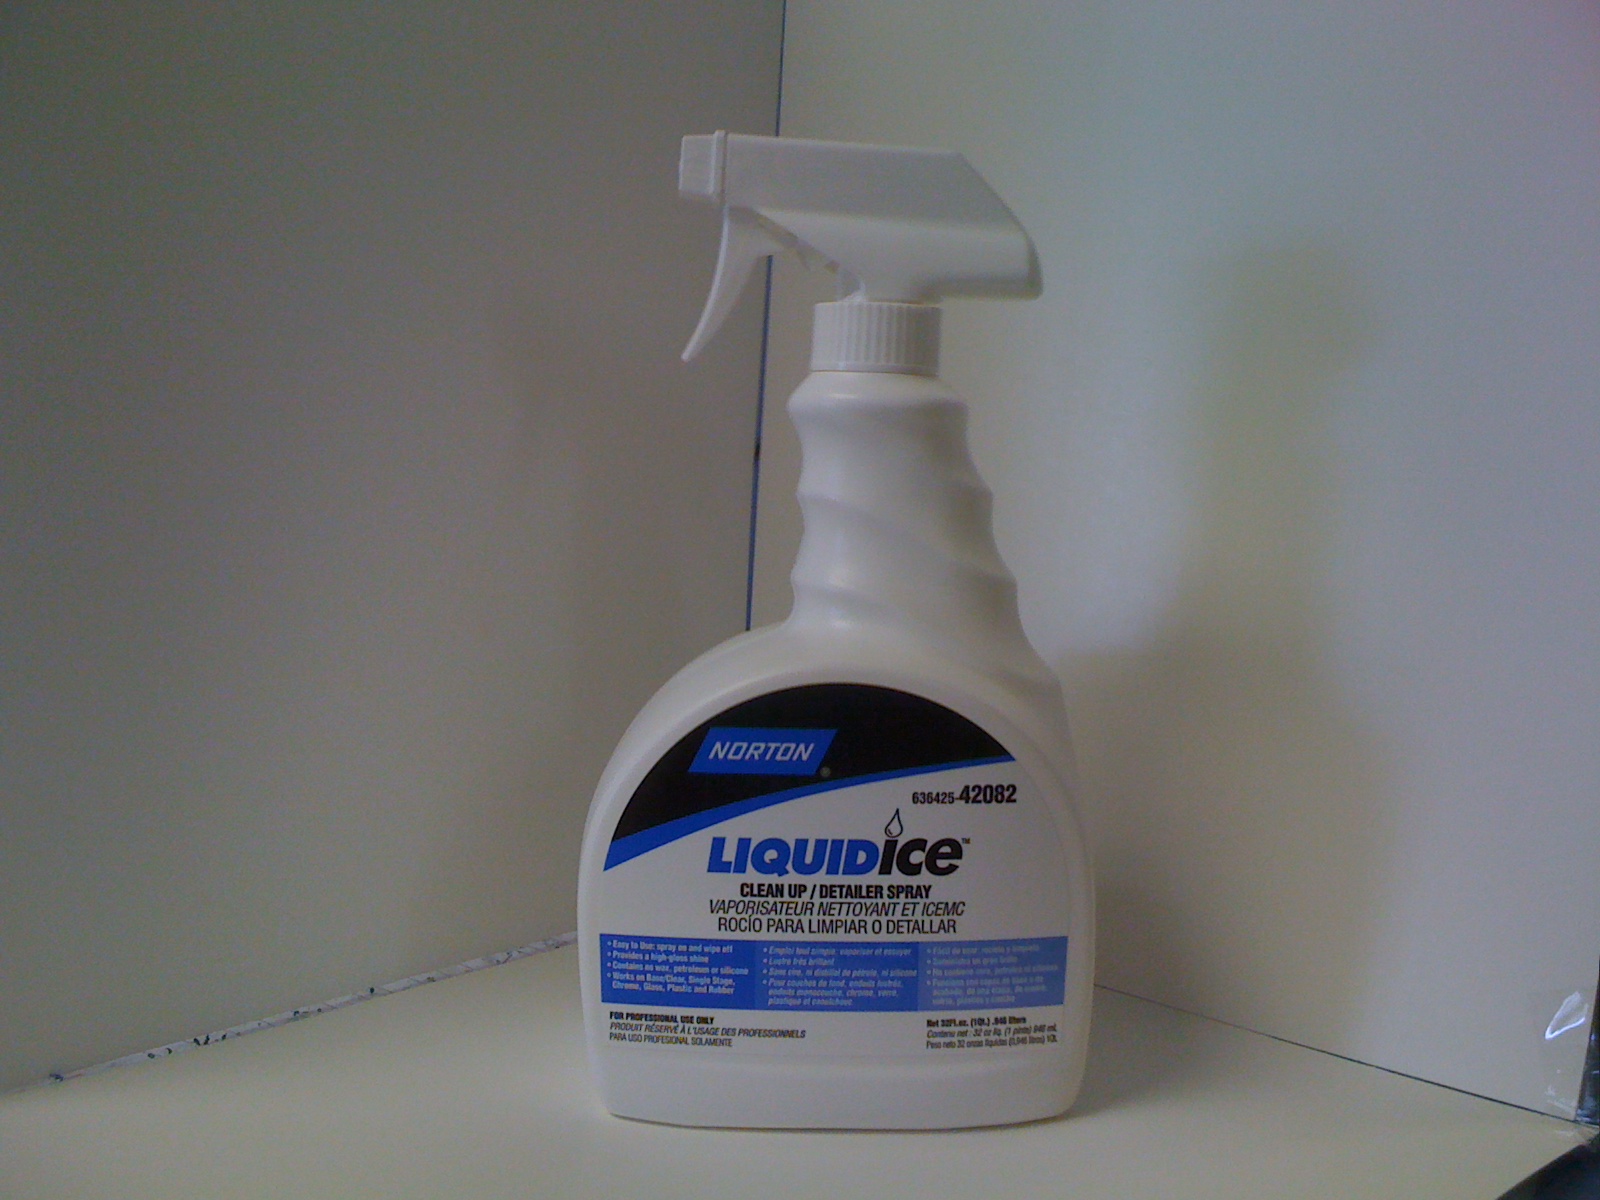 Norton Liquid Ice Clean up detailer spray 32oz.